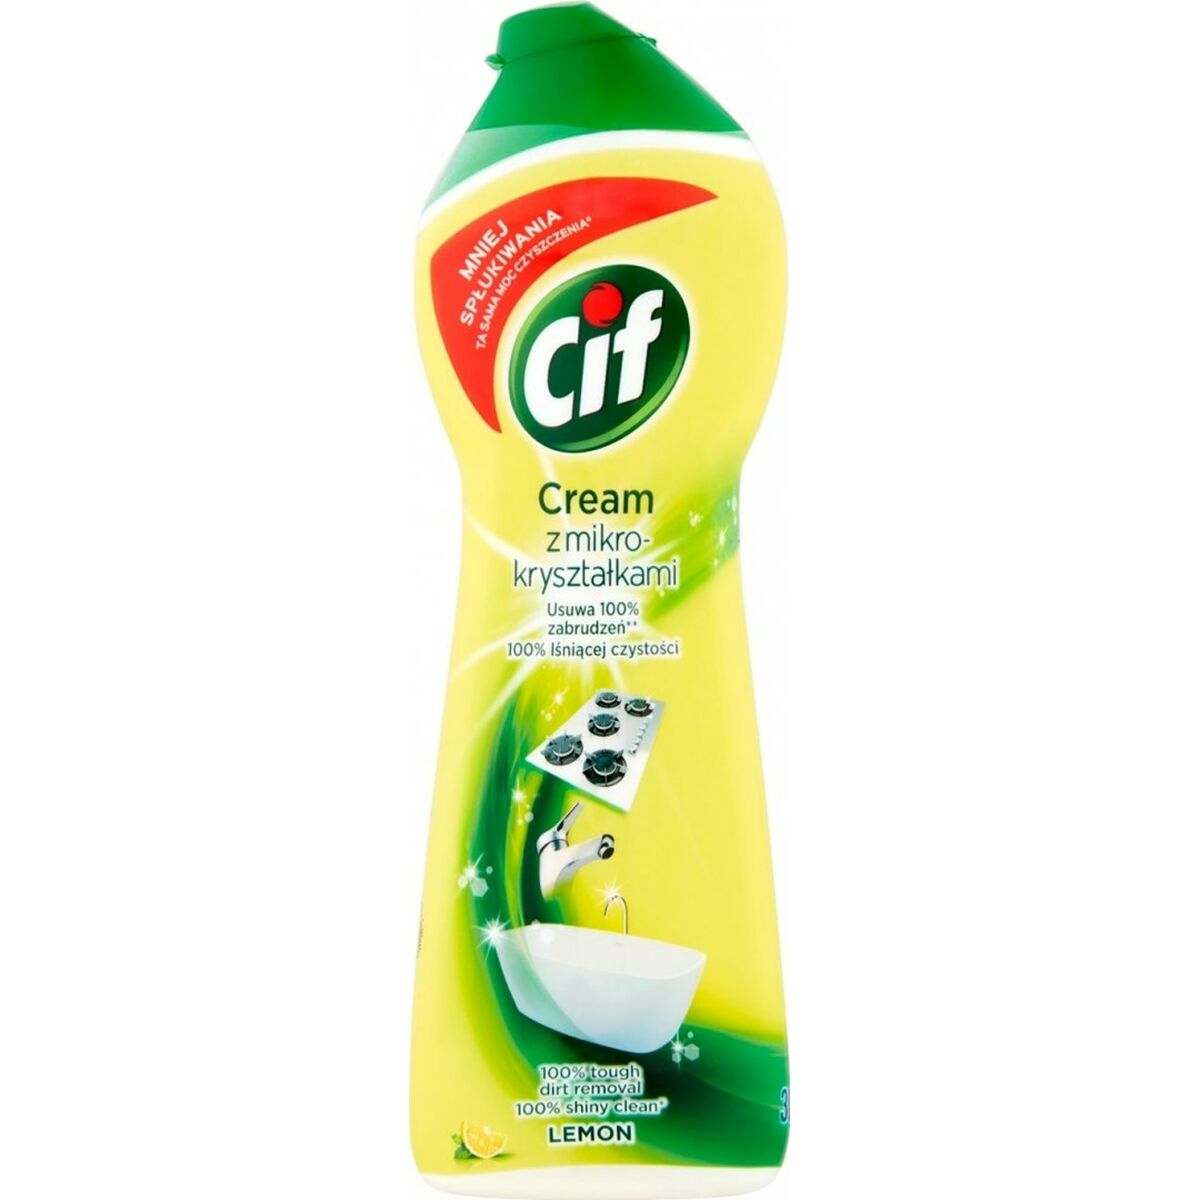 Detergente per superfici Cif Cream Limone 540 g